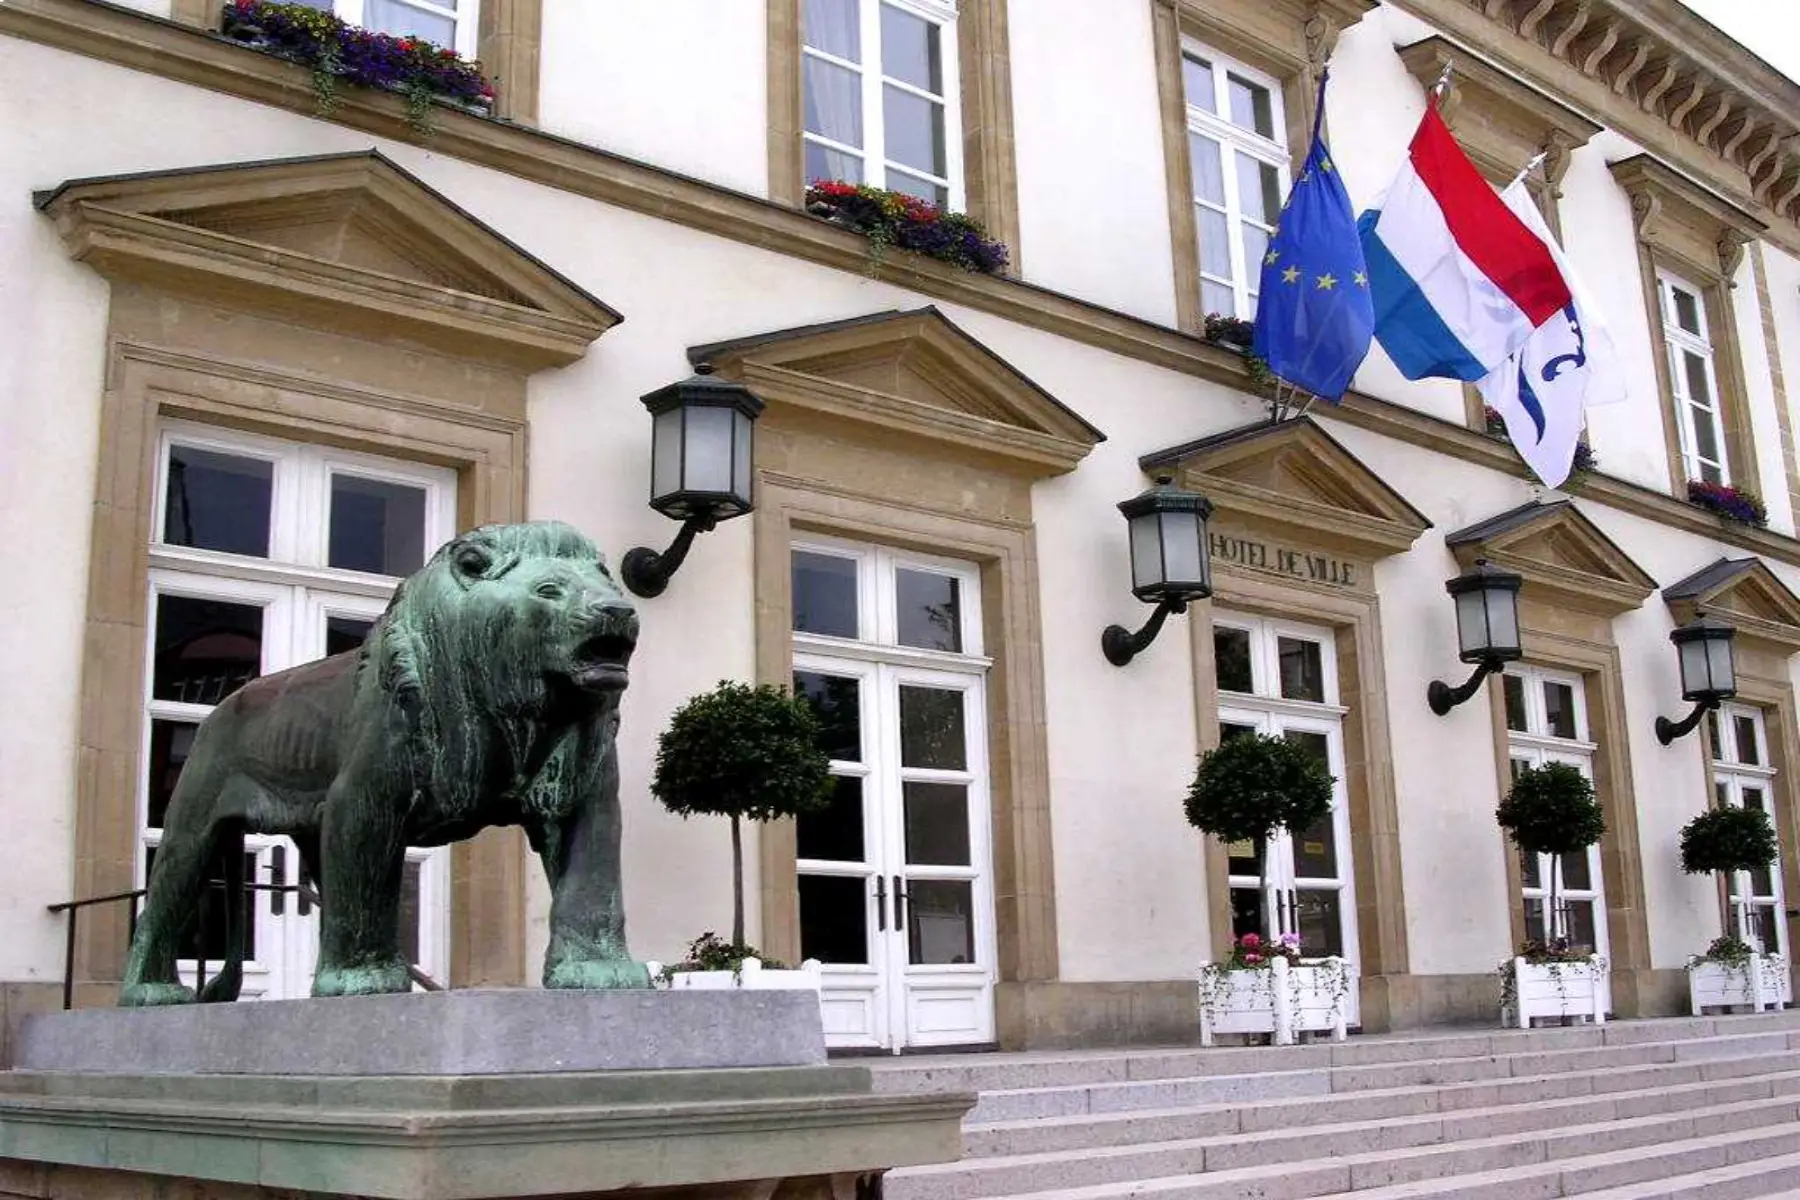 Exterior of Hôtel de Ville (Town Hall), Luxembourg, huge lion statue in front and flags above door.